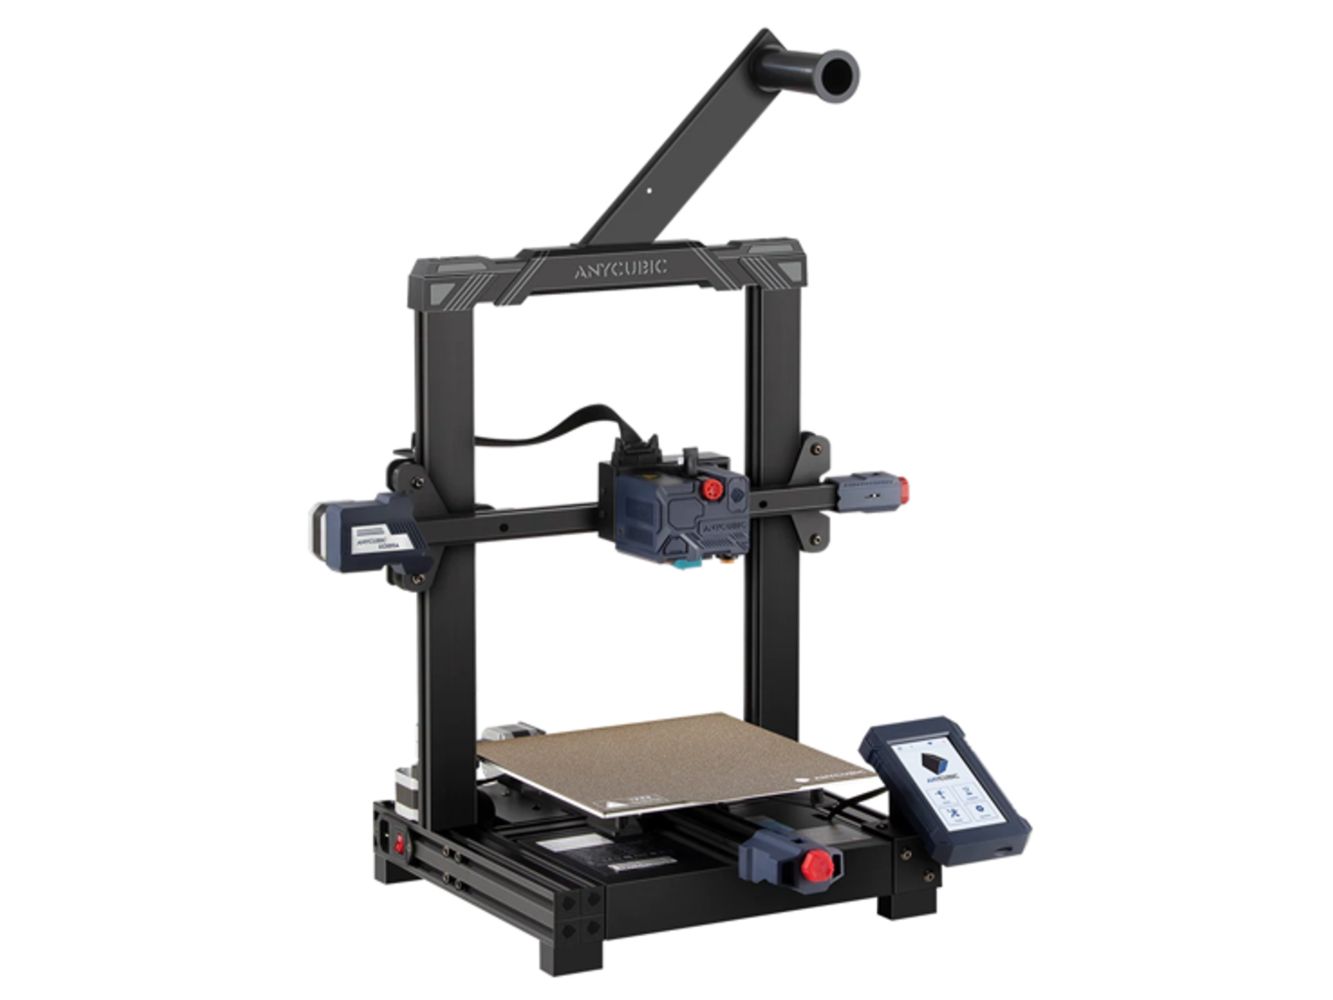 Recensione della stampante 3D Anycubic Kobra: stampa veloce a 180 mm/s 